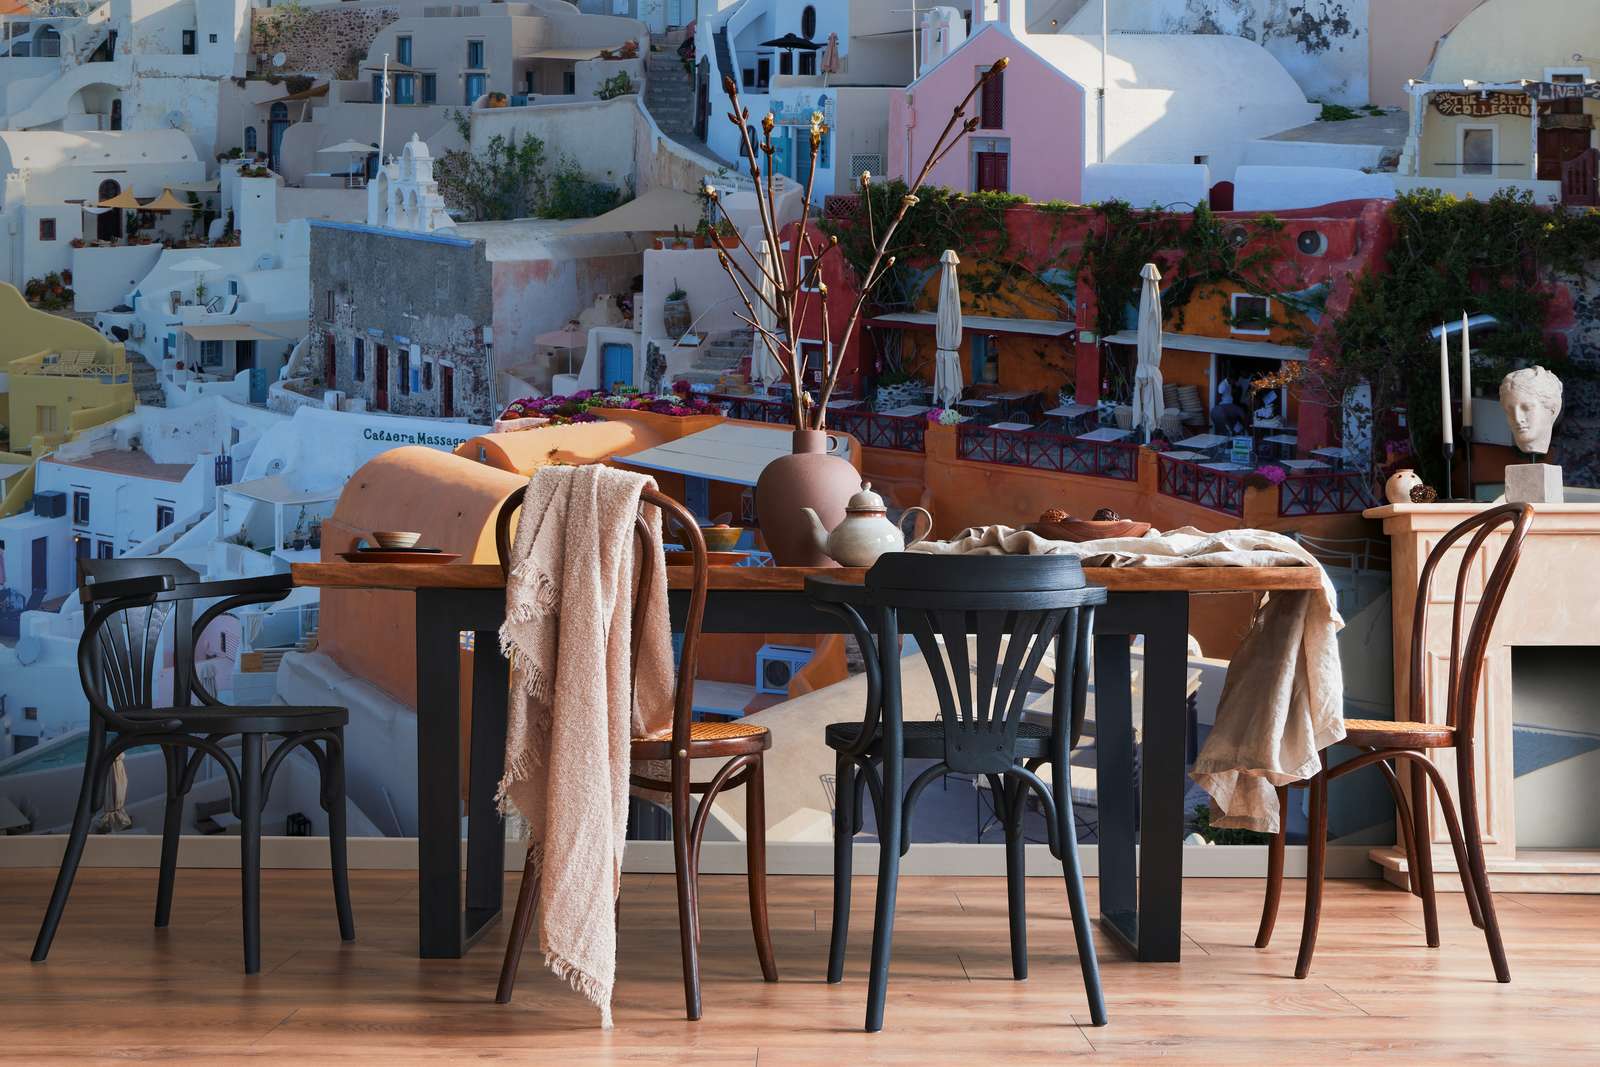             Photo wallpaper Houses of Santorini - structure non-woven
        